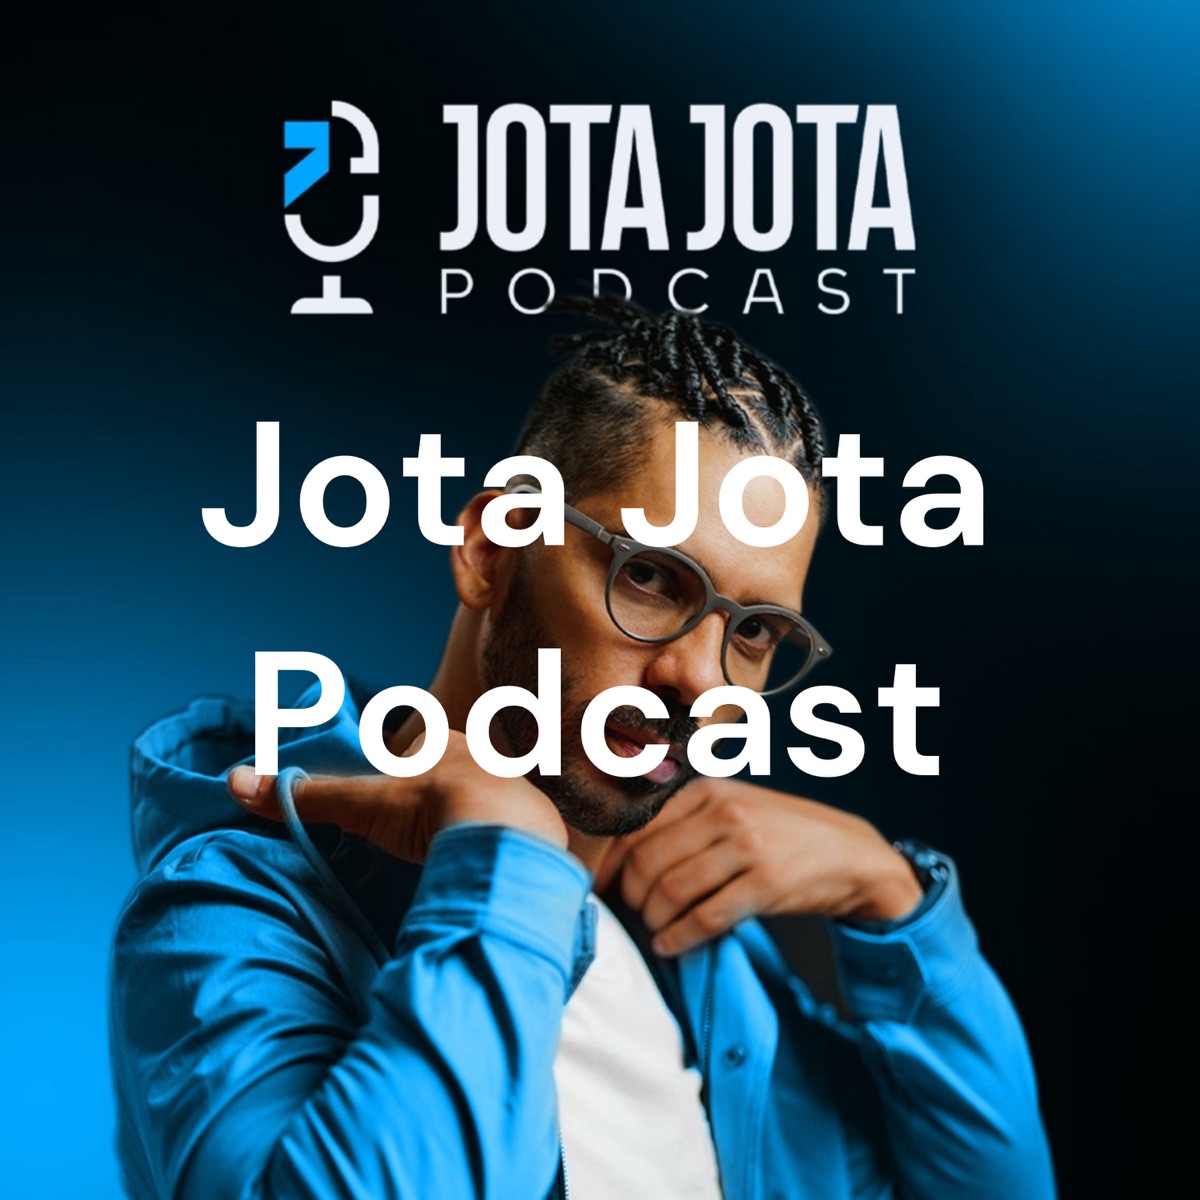 Revista Caiobá – Podcast – Podtail